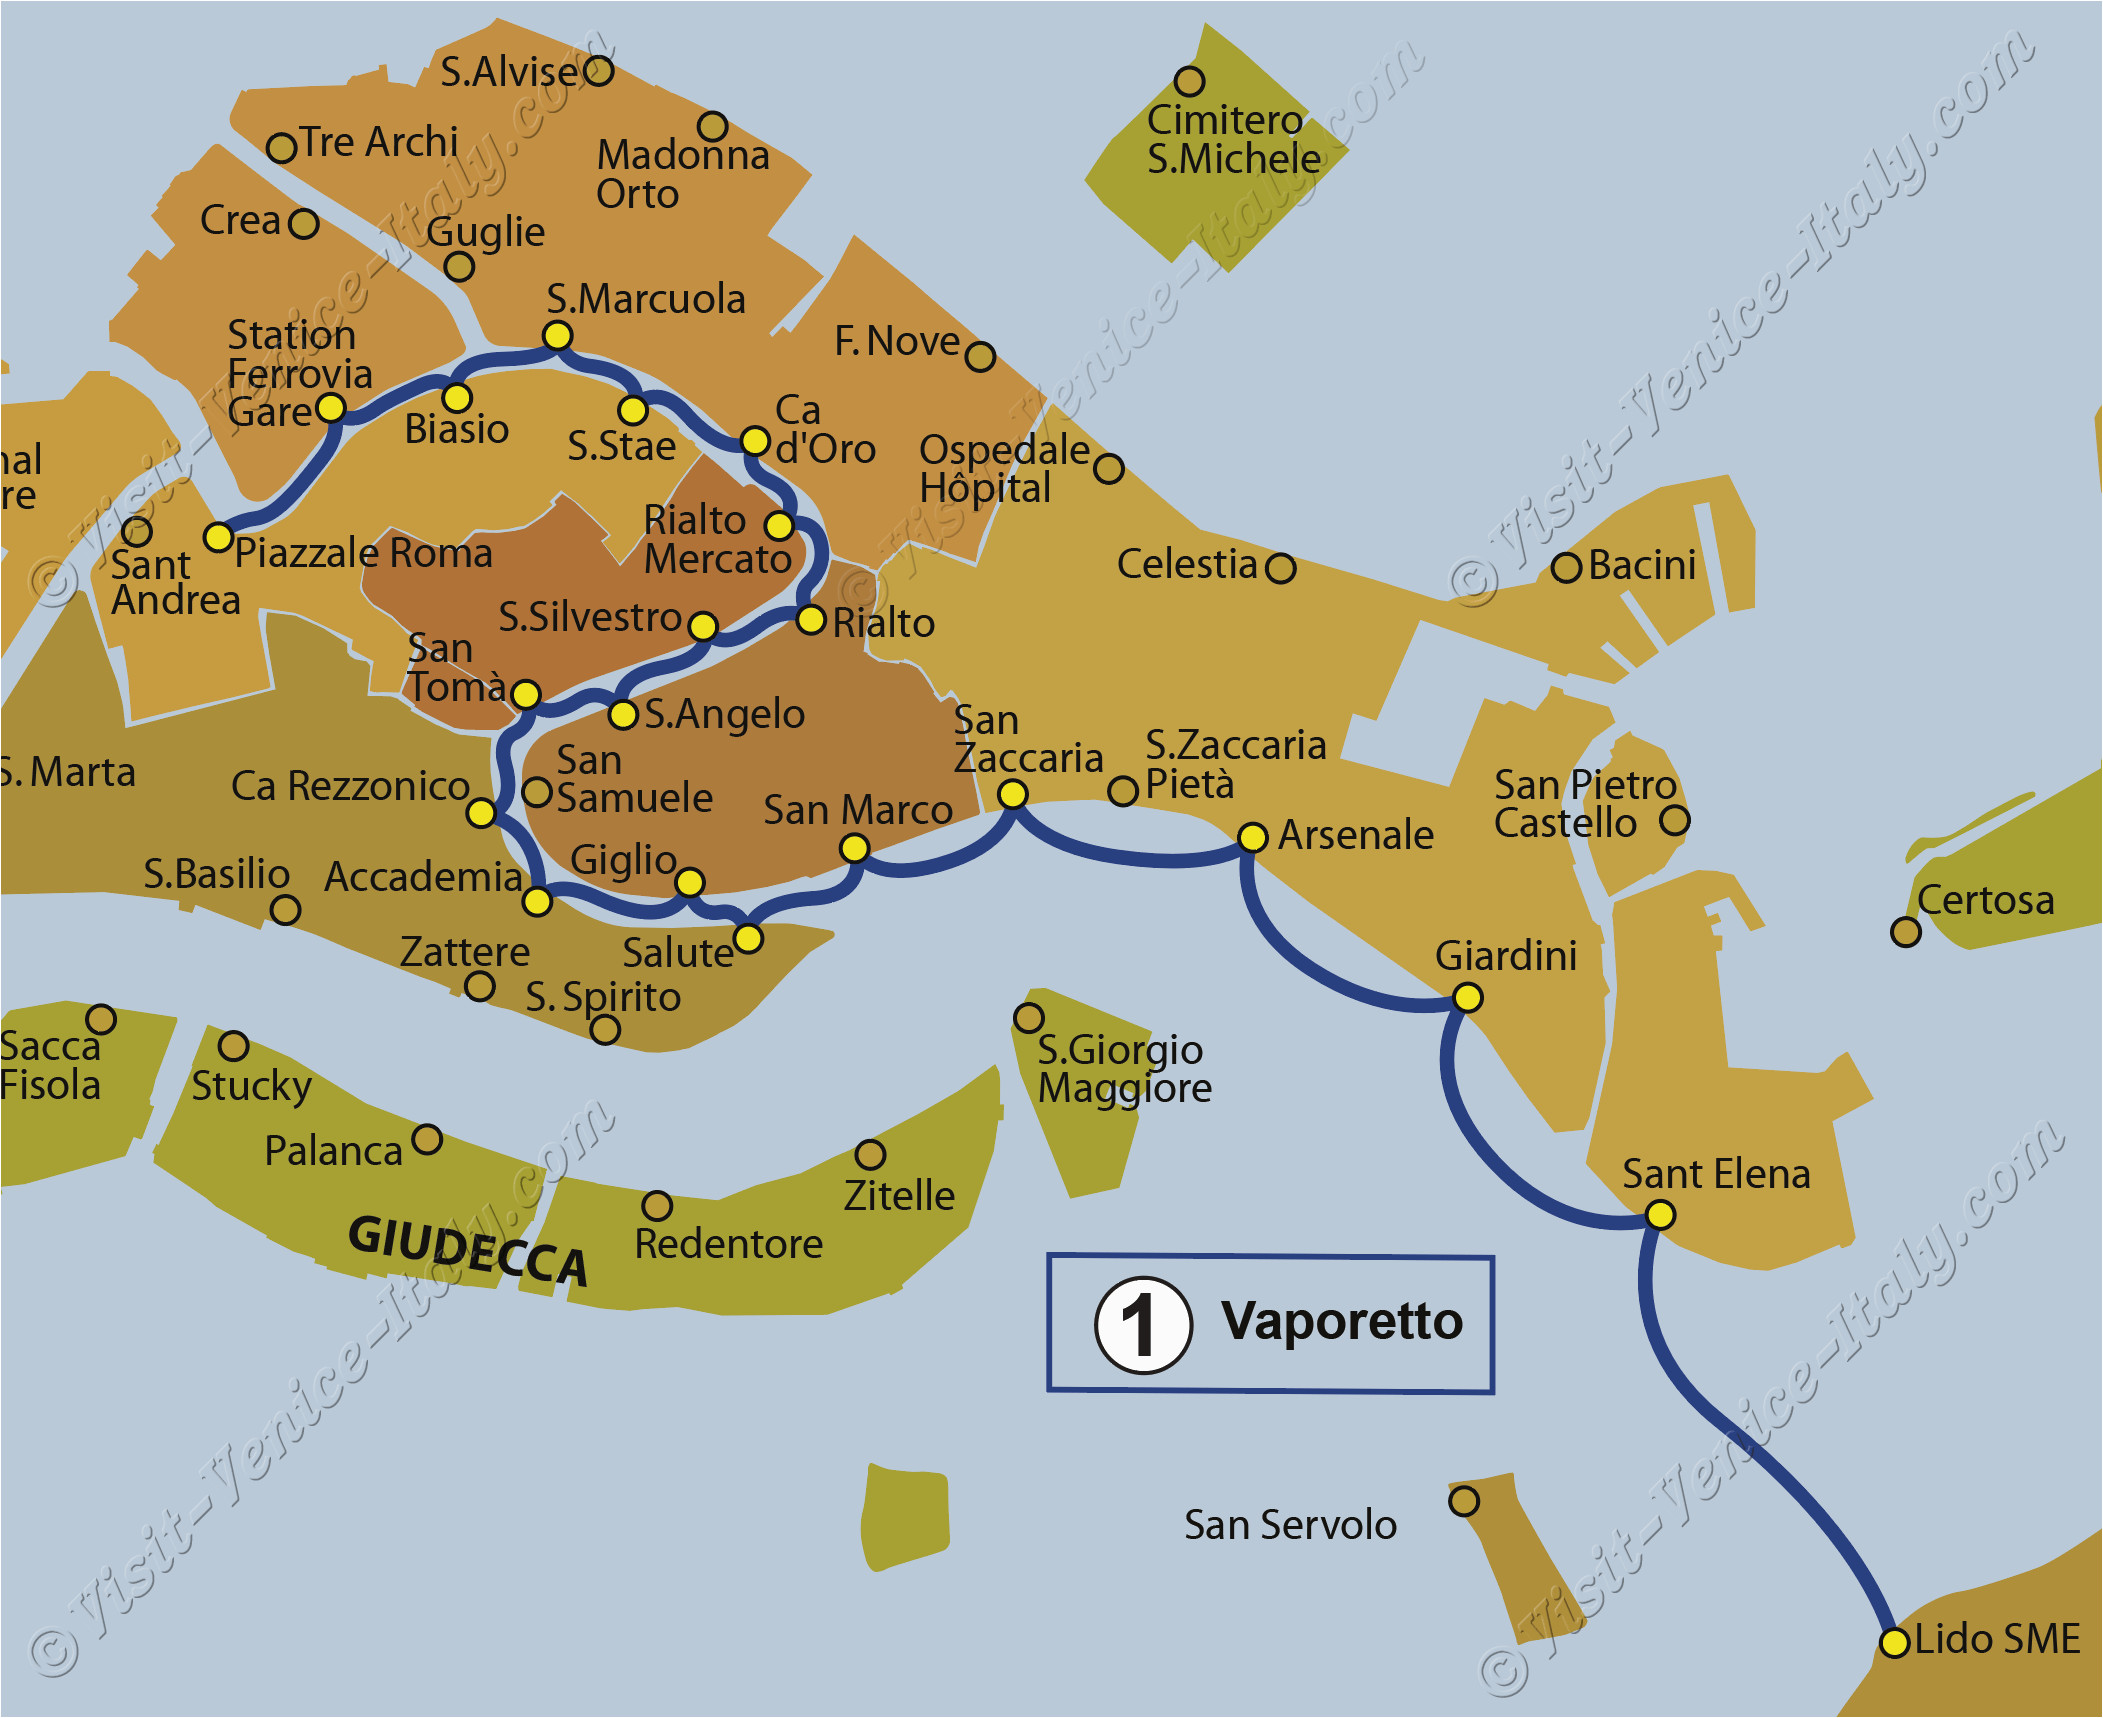 transport vaporetto waterbus bus lines maps venice italy